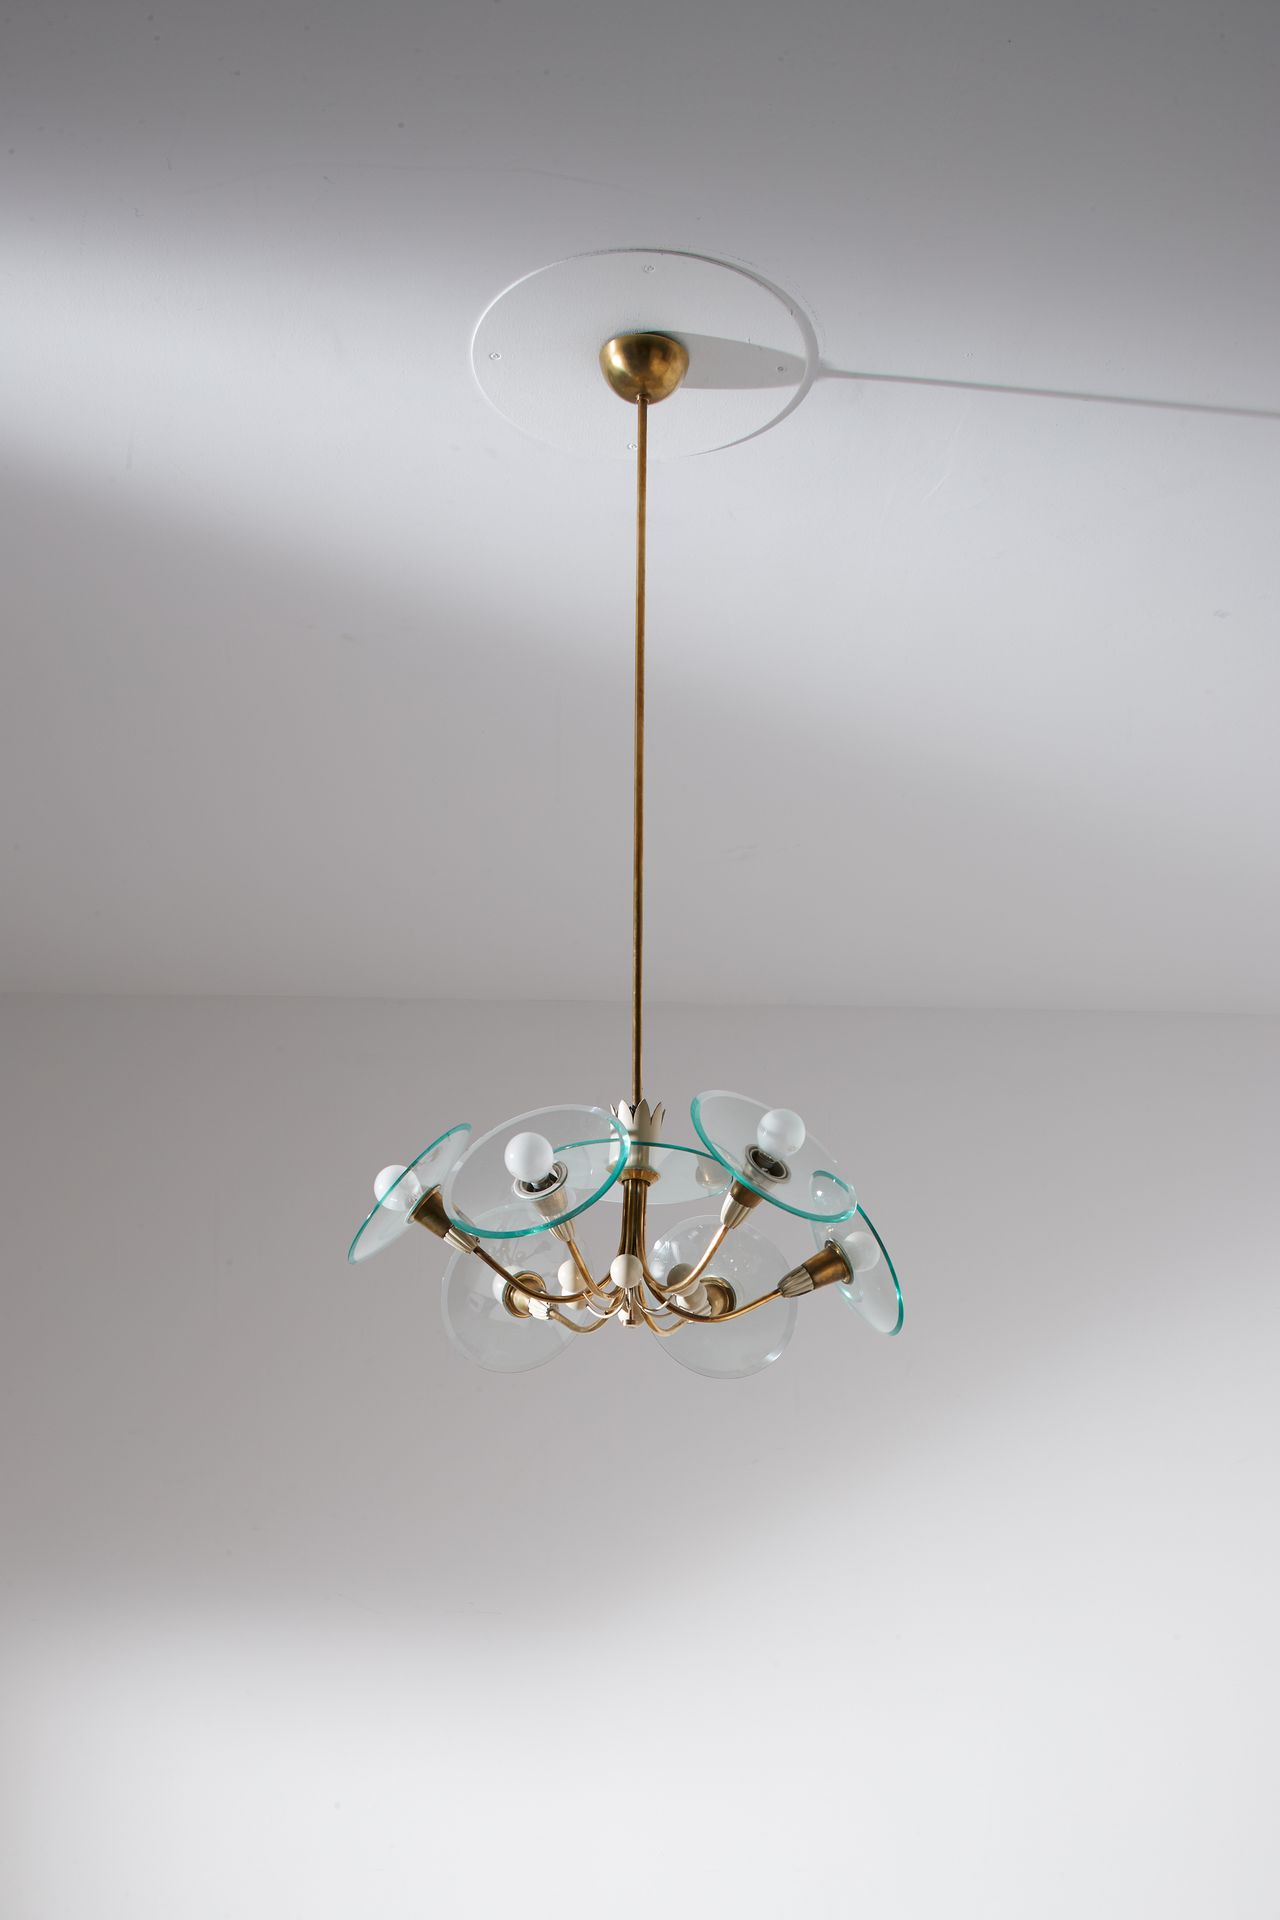 PIETRO CHIESA 4384M型吊灯。黄铜，涂铝，弧形和地面玻璃。由Fontana Arte在50年代生产。Fontana Arte真实性证书。
厘米1&hellip;